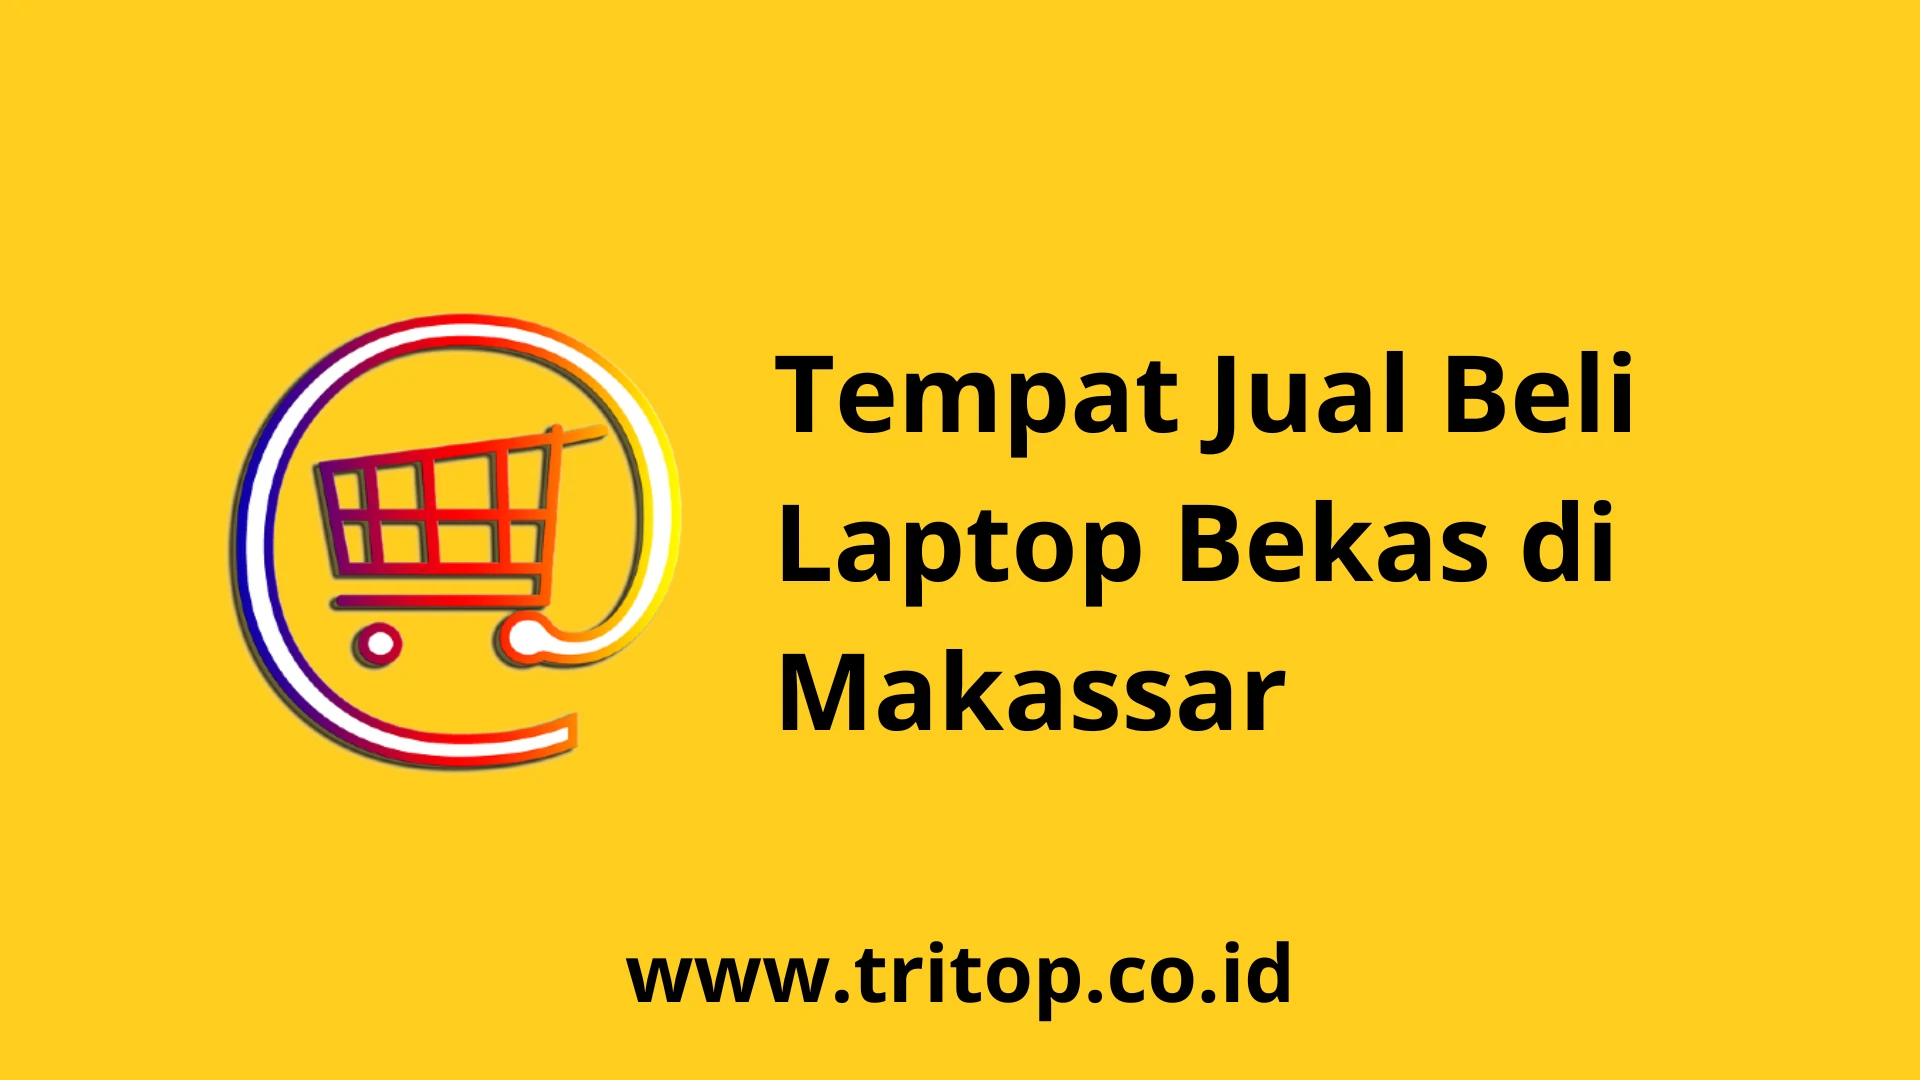 Tempat Jual Beli Laptop Bekas di Makassar Tritop.co.id